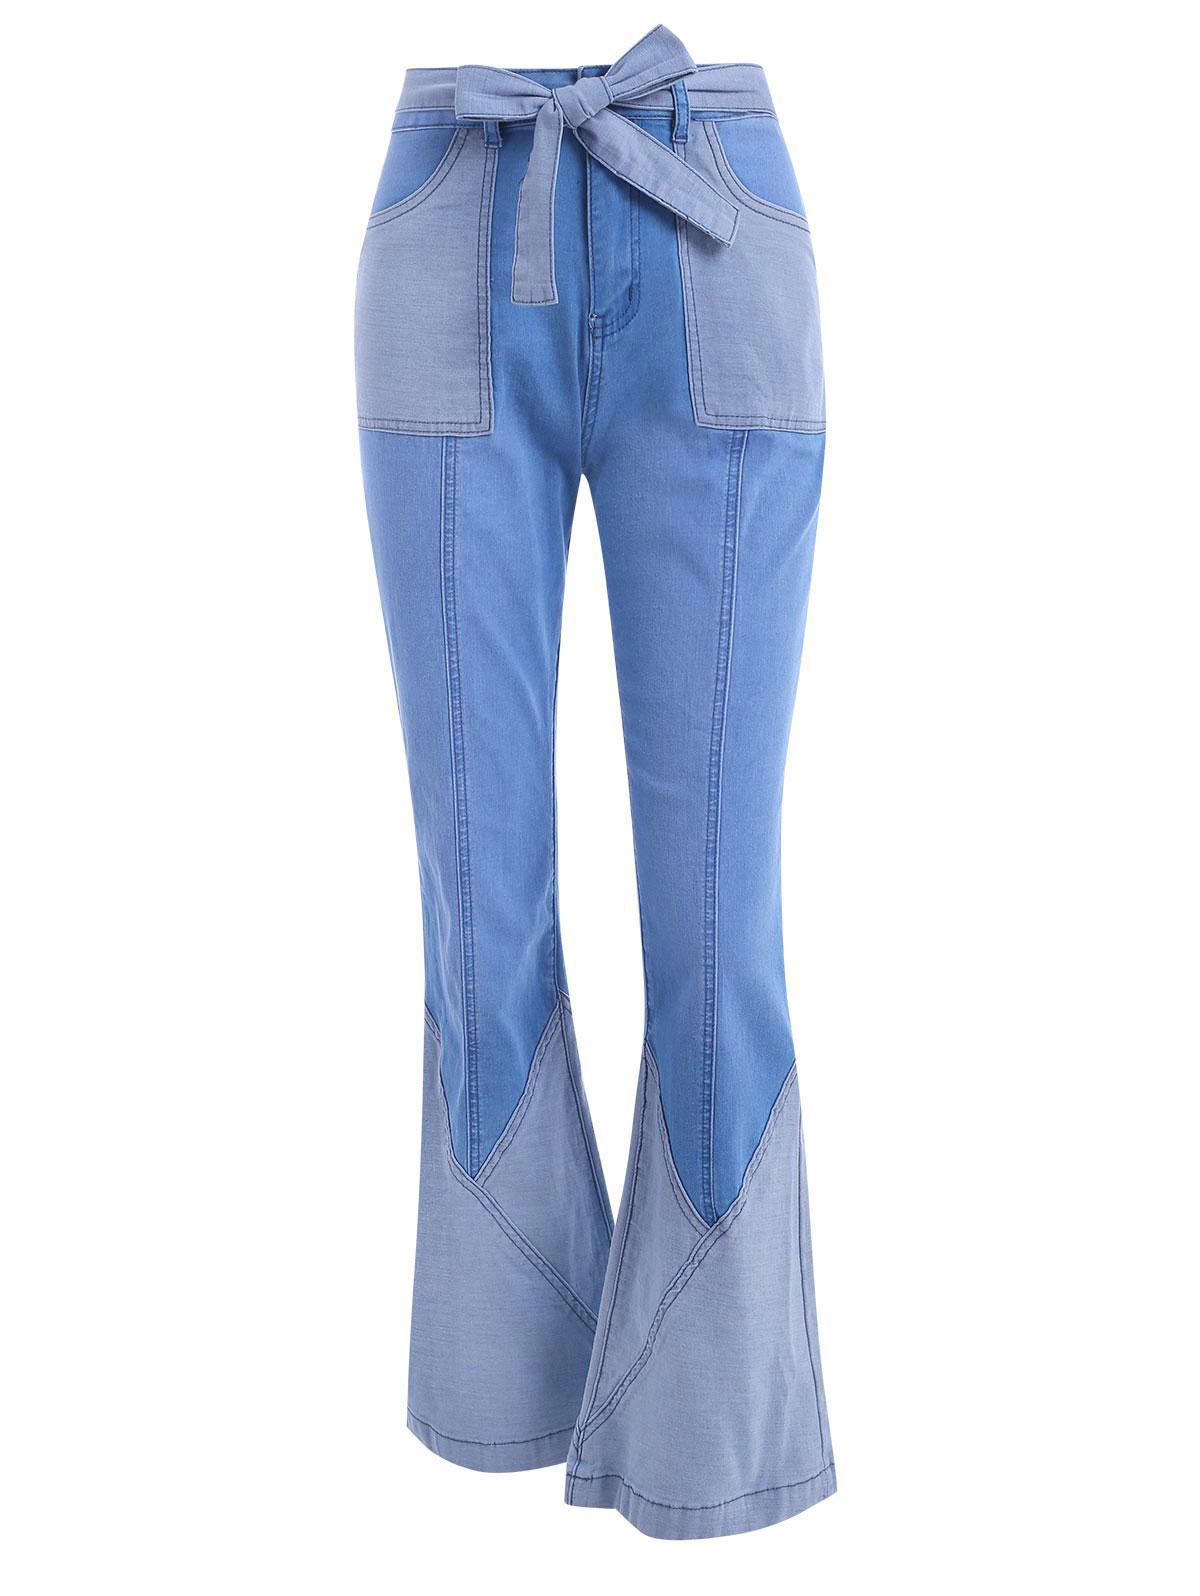 Zaful Denim Belted Patchwork Flare Jeans in Light Blue (Blue) | Lyst